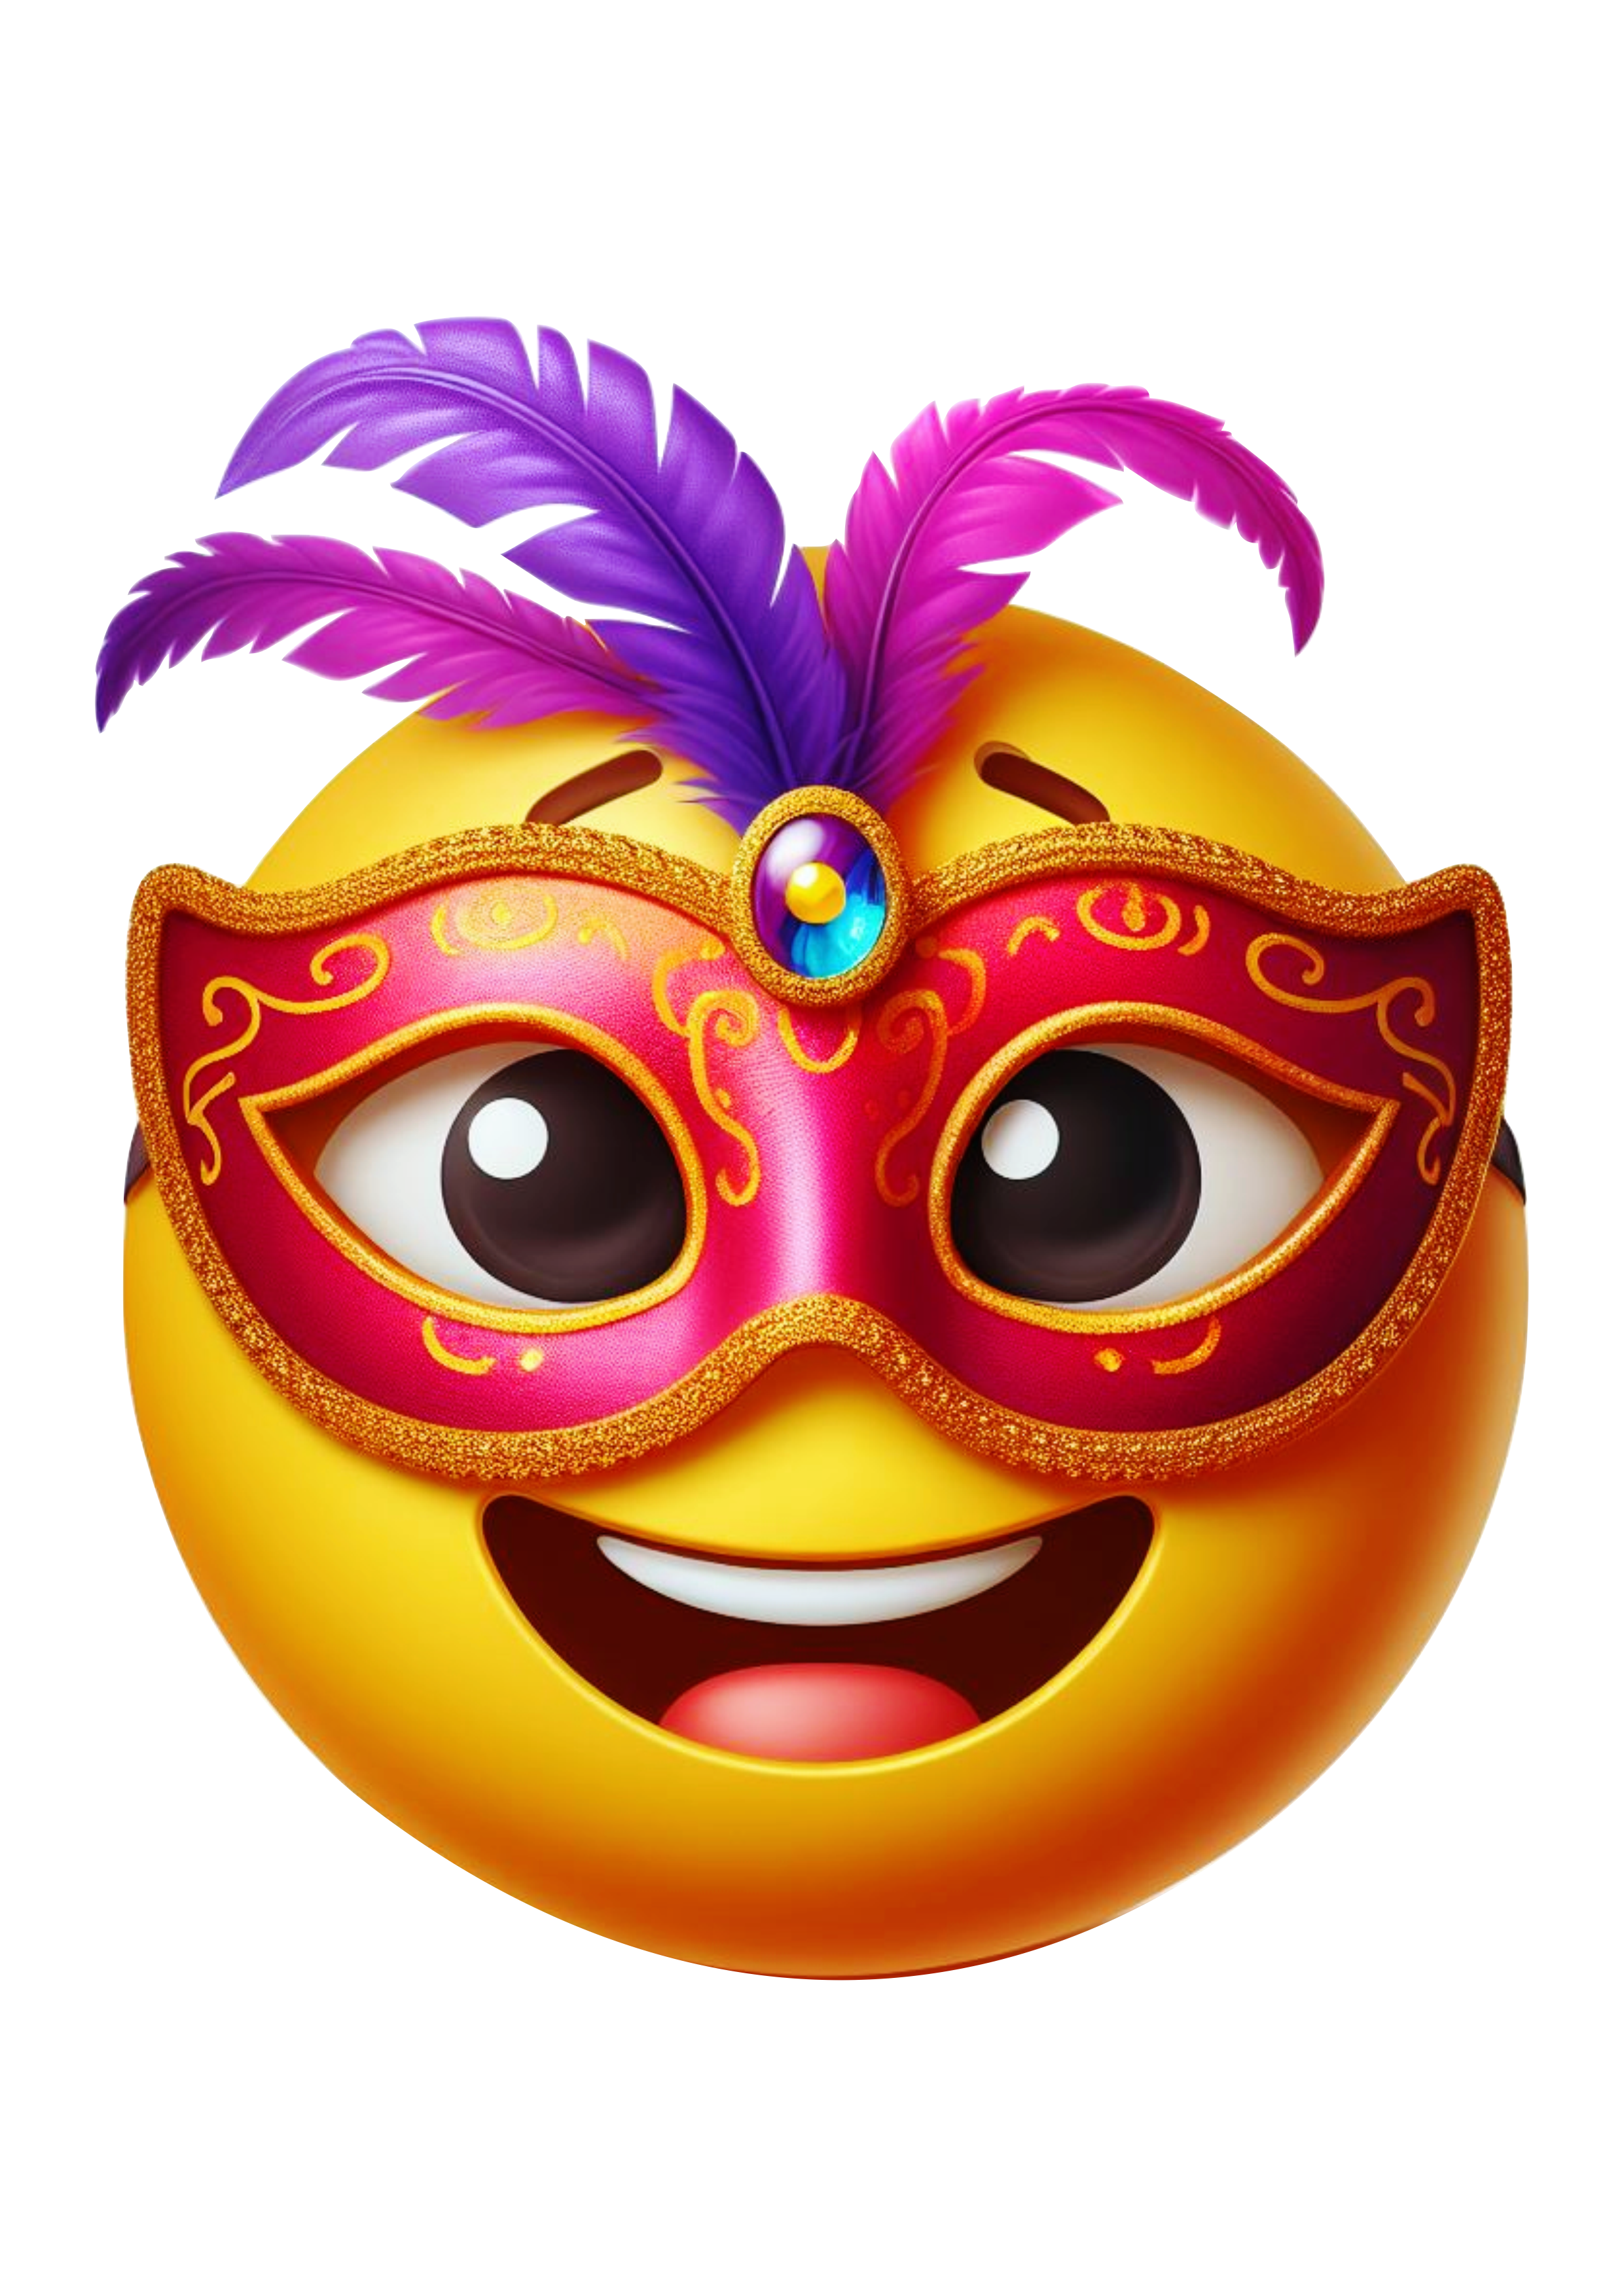 Carnaval emoji para whatsapp instagram e facebook baile de máscaras emoticon free design clipart grátis pack de imagens png